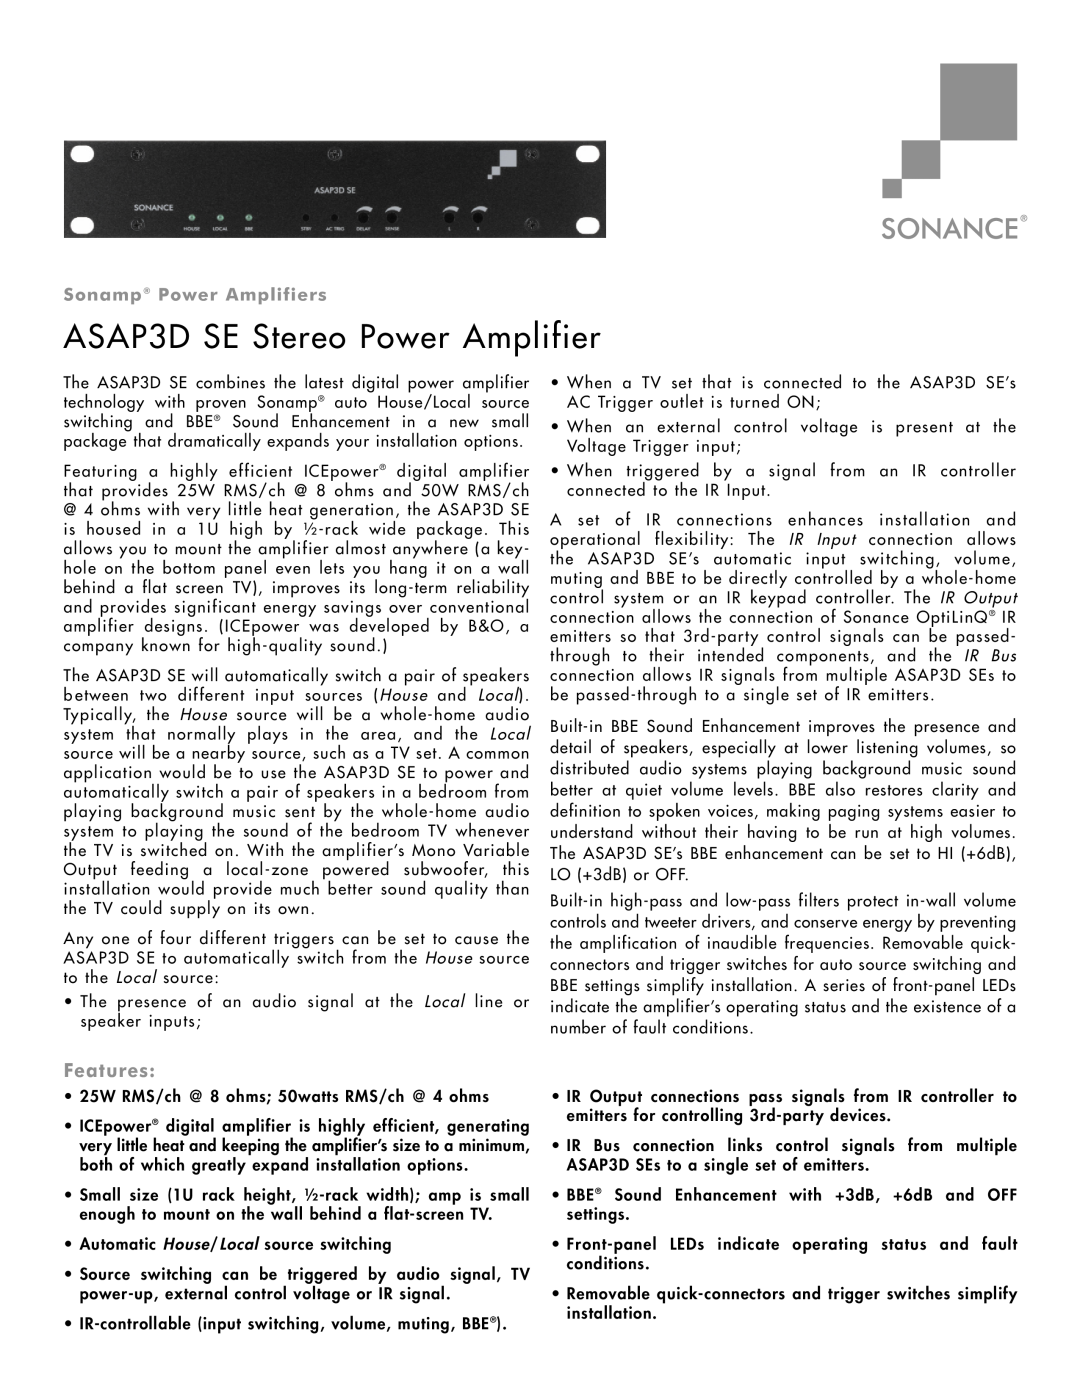 Sonance manual ASAP3D SE Stereo Power Amplifier, Features, Sonamp Power Amplifiers 